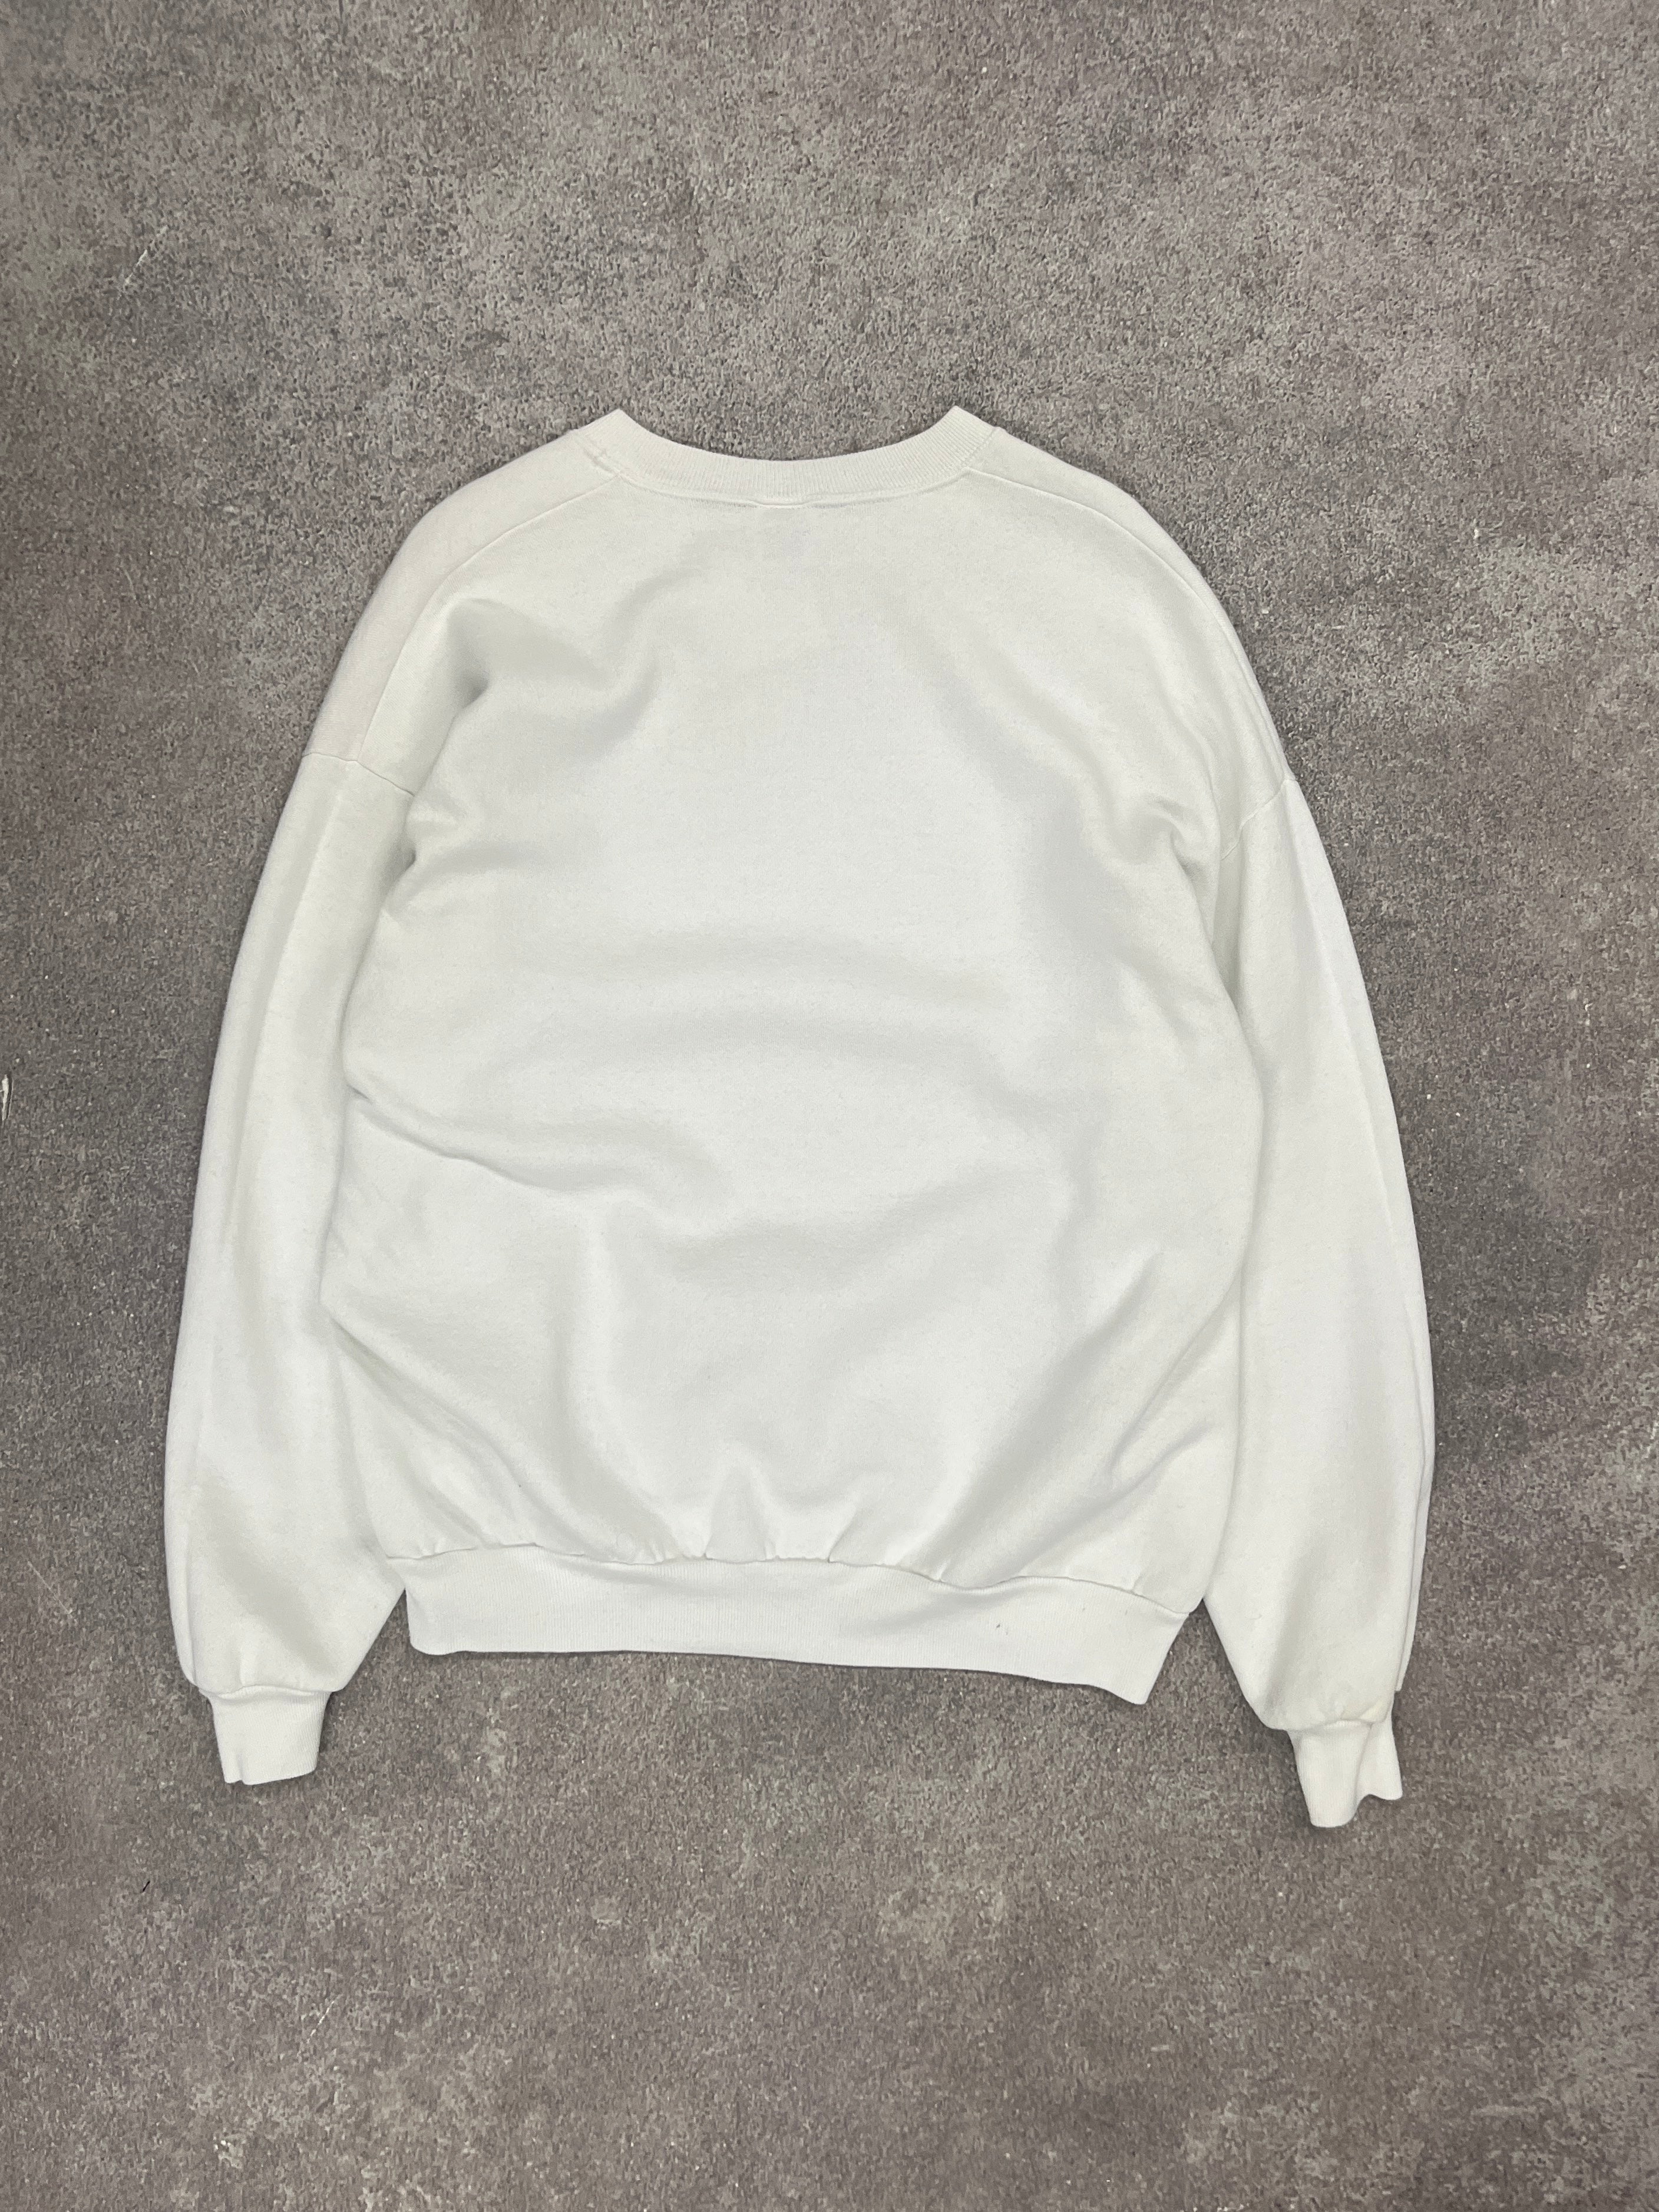 Vintage Blank Sweater White // X-Large - RHAGHOUSE VINTAGE